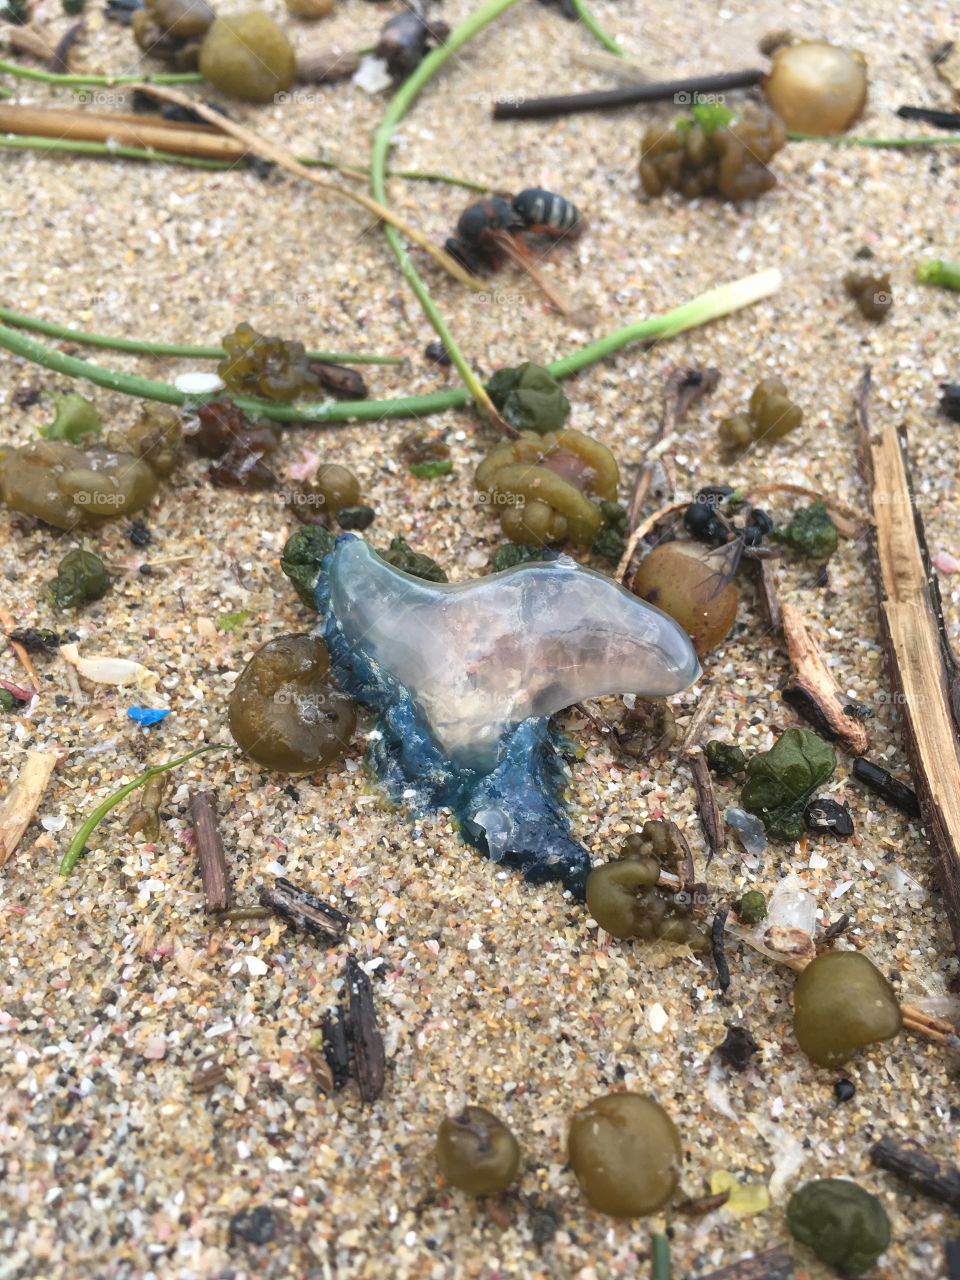 Blue bottle on the sand